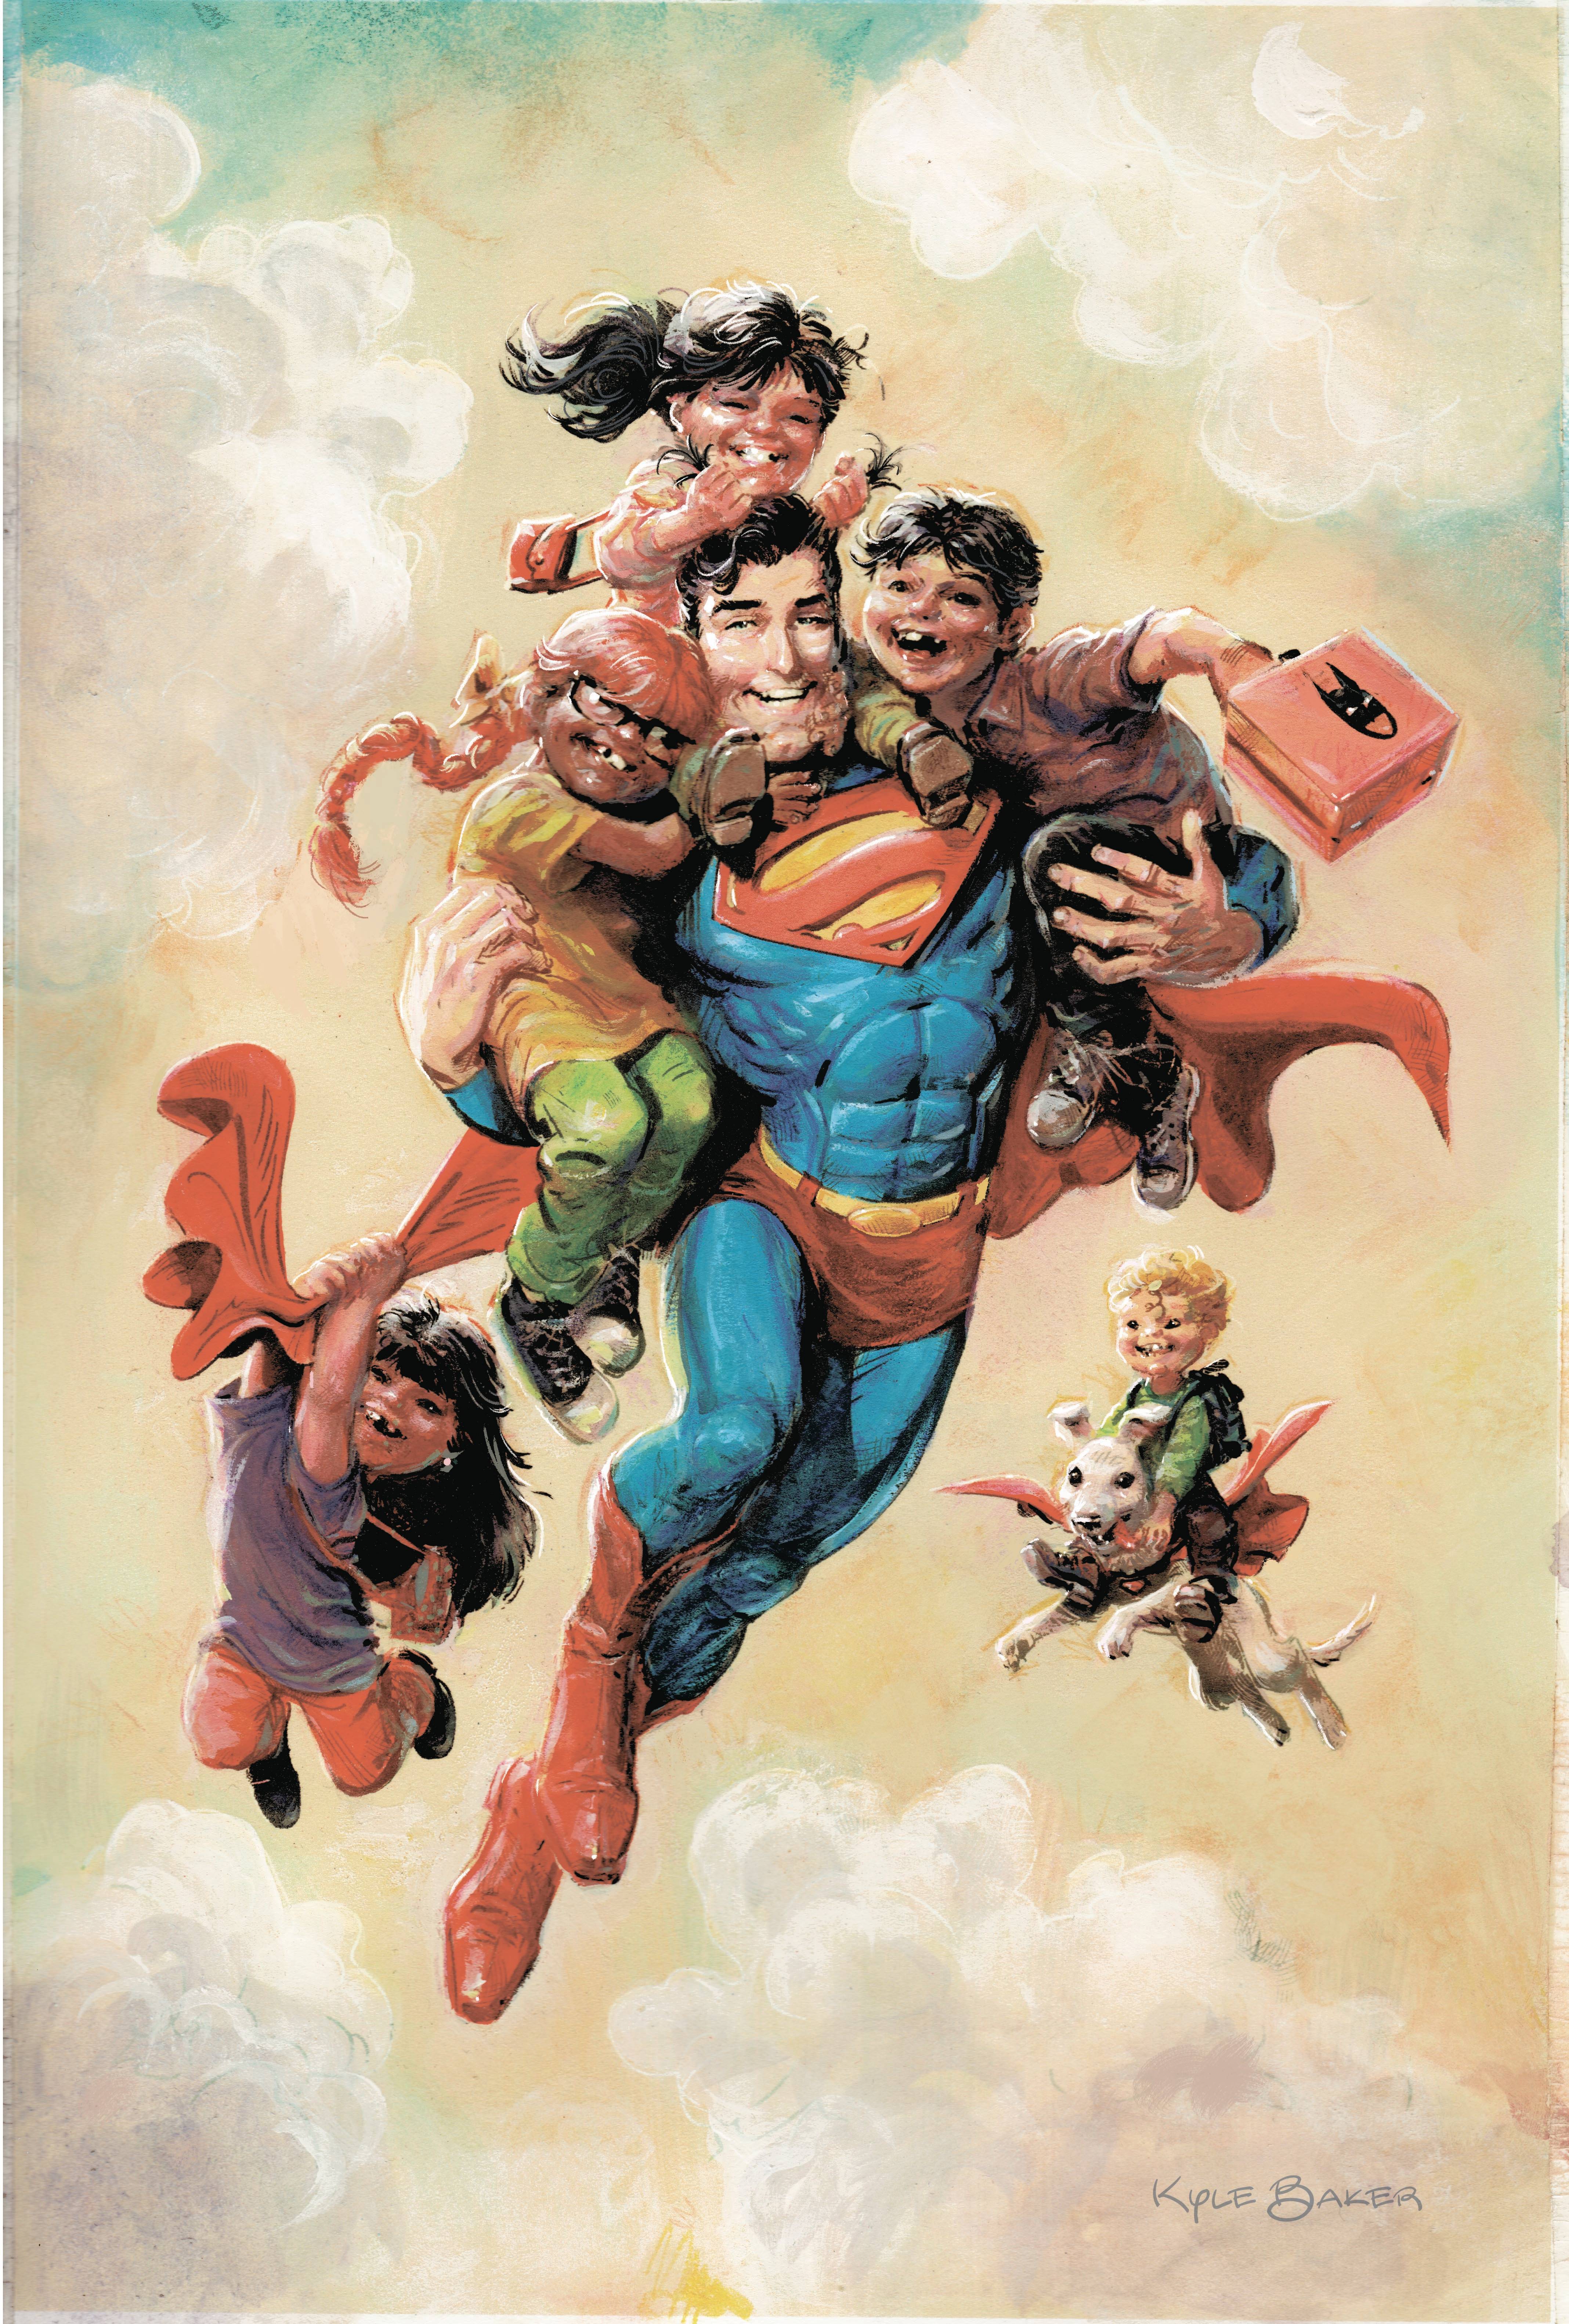 OF 3 $7.99 1ST PRINT GURIHIRU MAIN COVER SUPERMAN SMASHES THE KLAN #1 2019